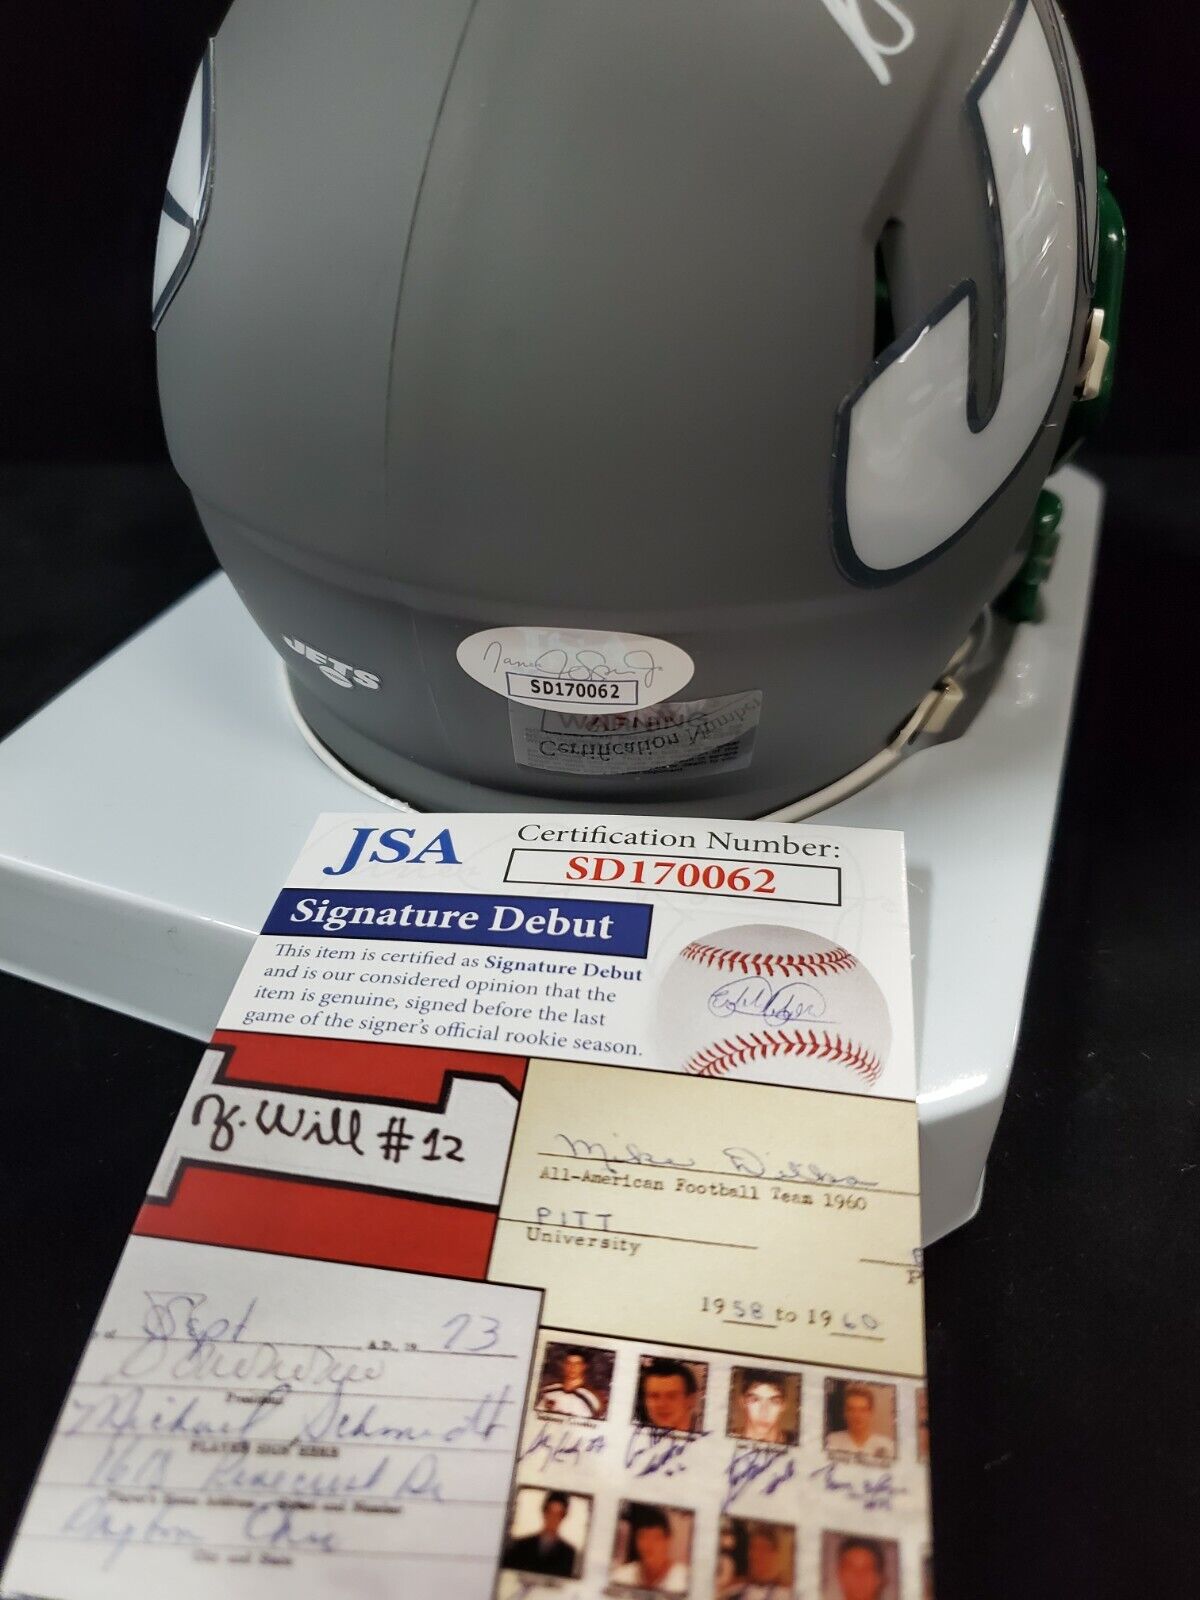 MVP Authentics N.Y. Jets Alijah Vera-Tucker Autographed Signed Amp Mini Helmet Jsa Coa 134.10 sports jersey framing , jersey framing